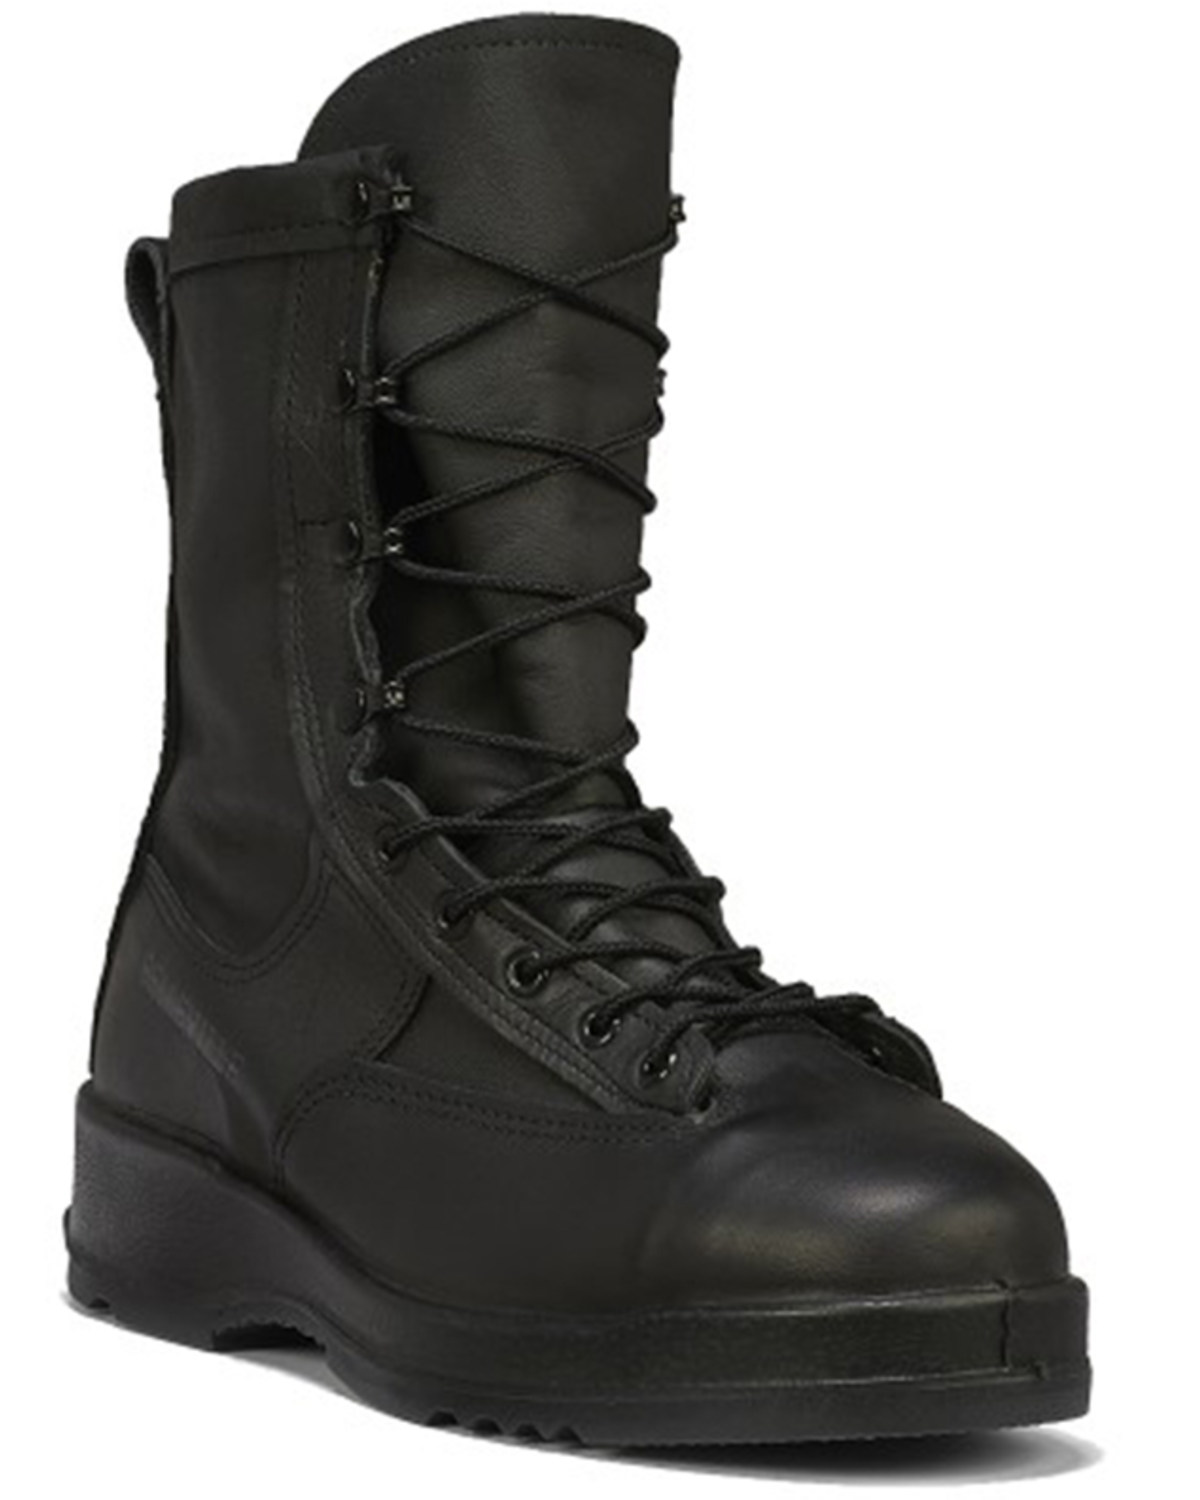 Belleville Men's 8" 200g Insulated Waterproof Military Work Boots - Steel Toe